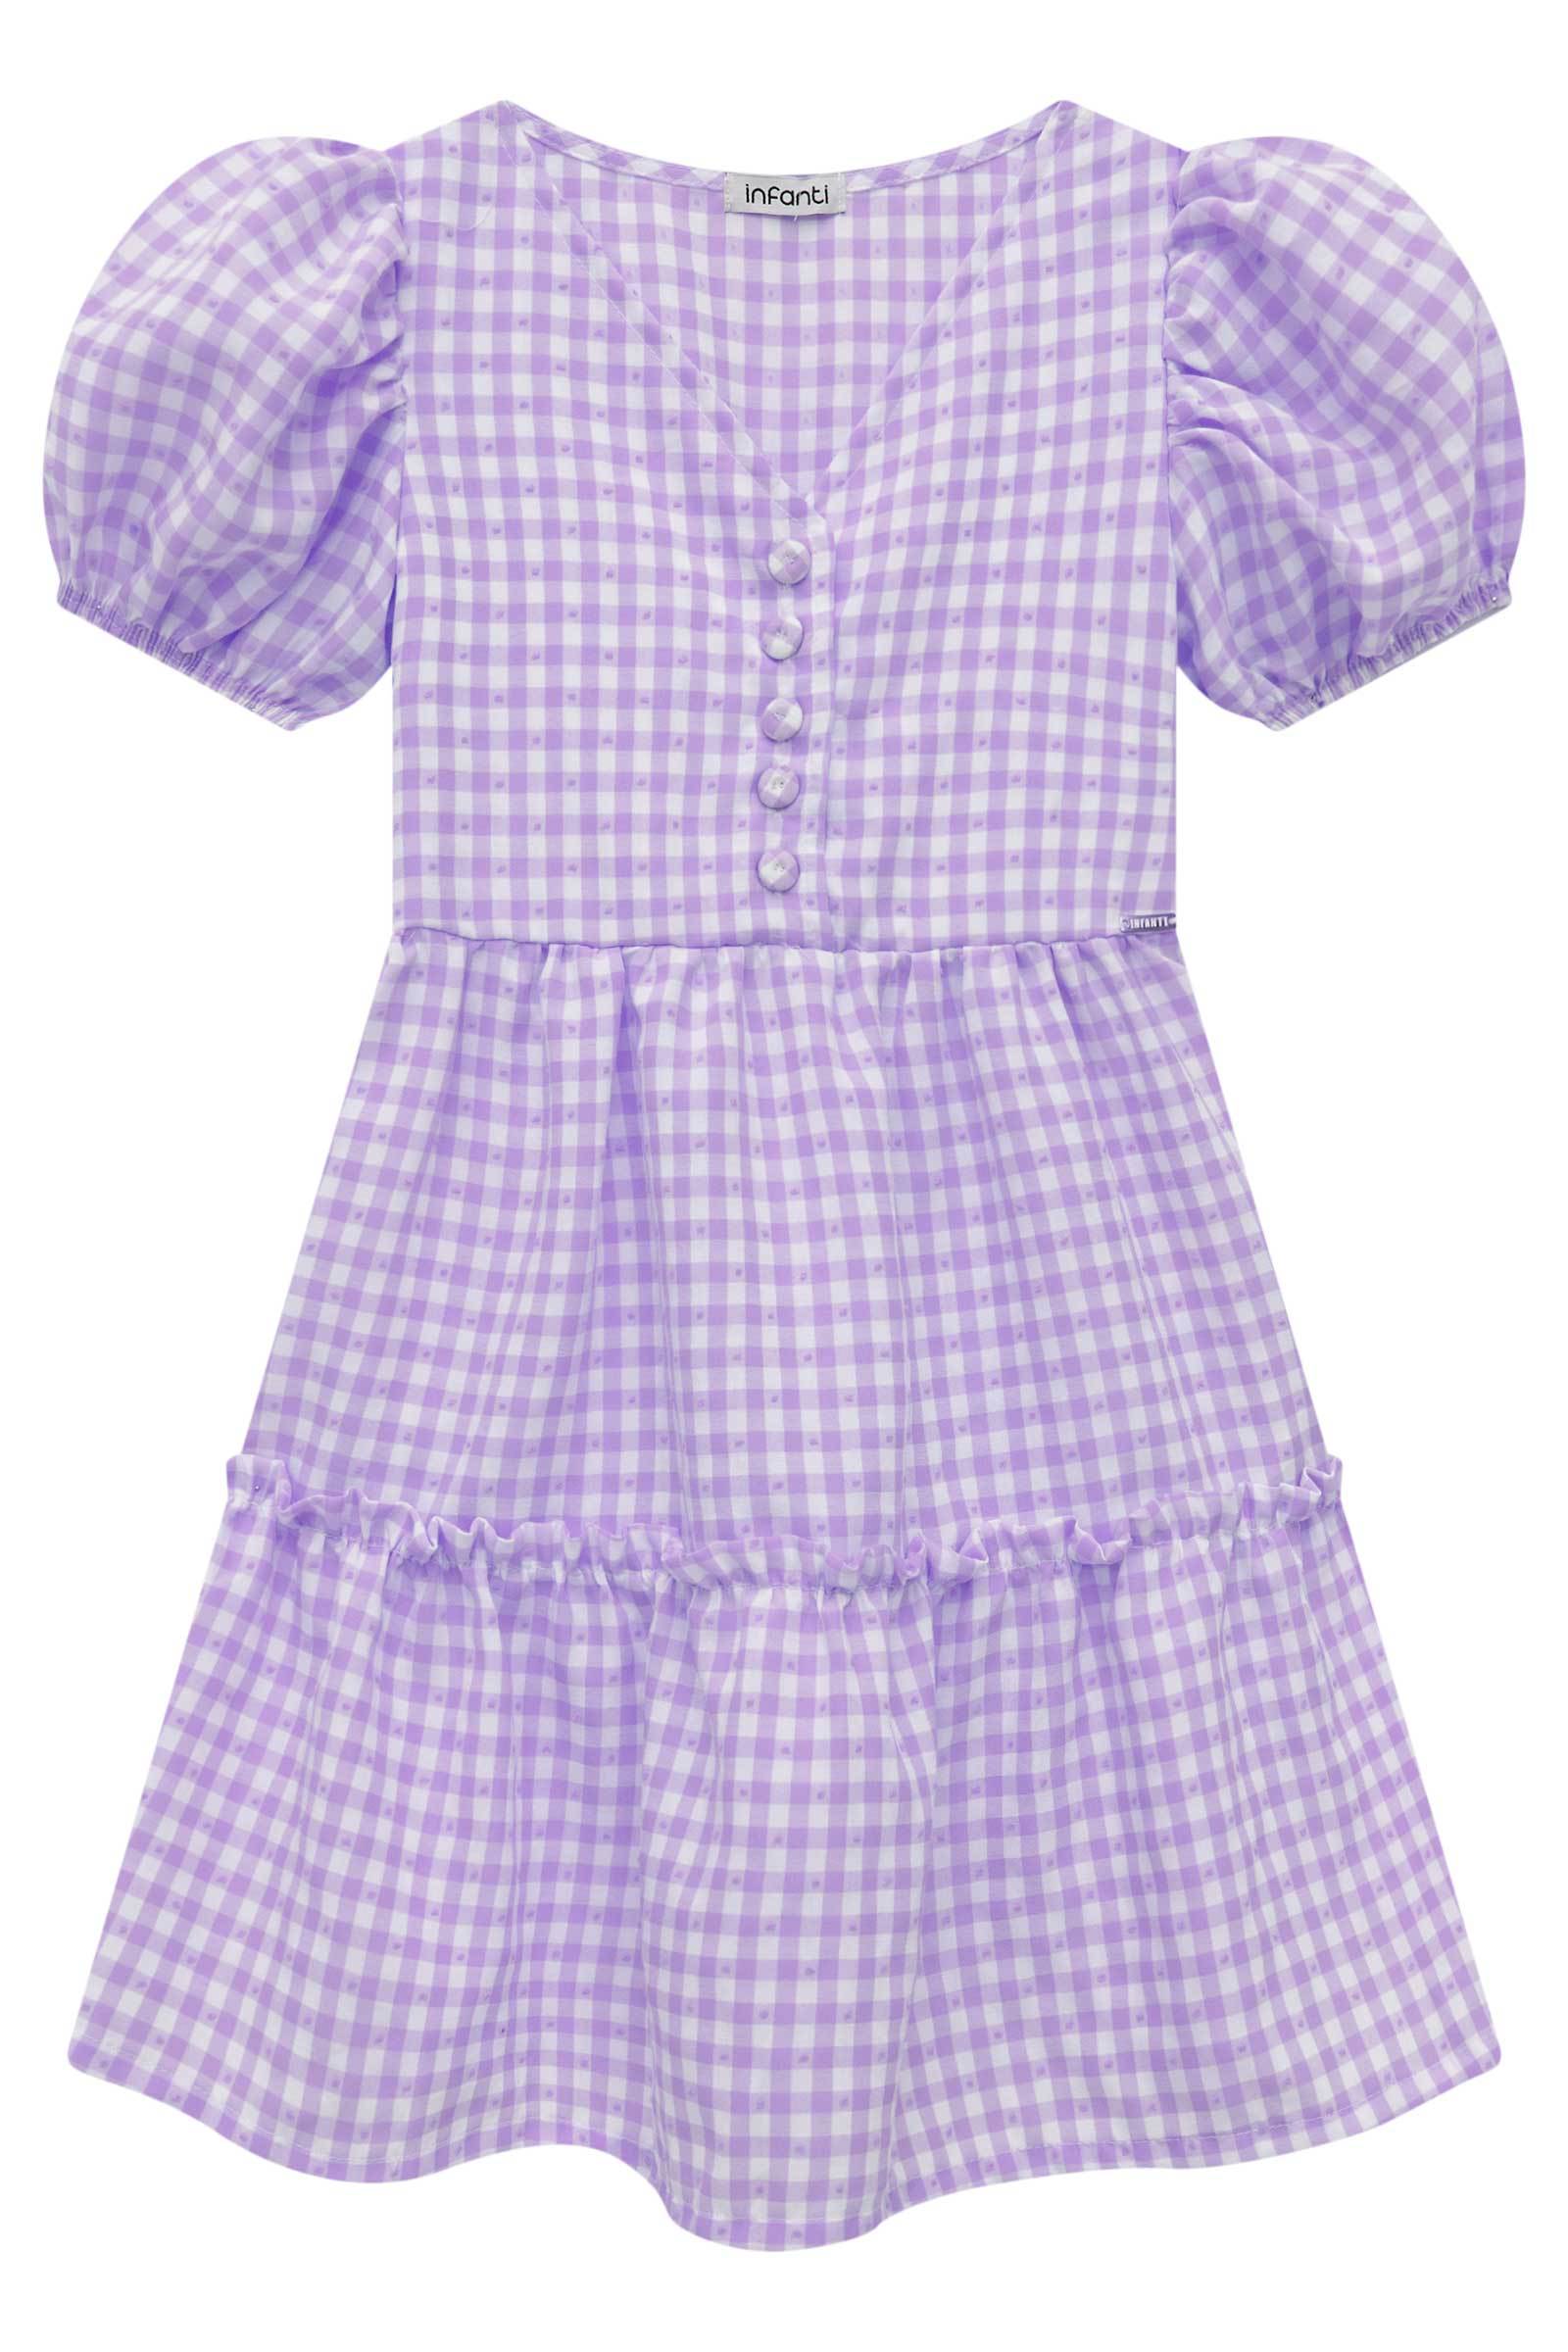 Vestido em Tricoline Vichy 75056 Infanti